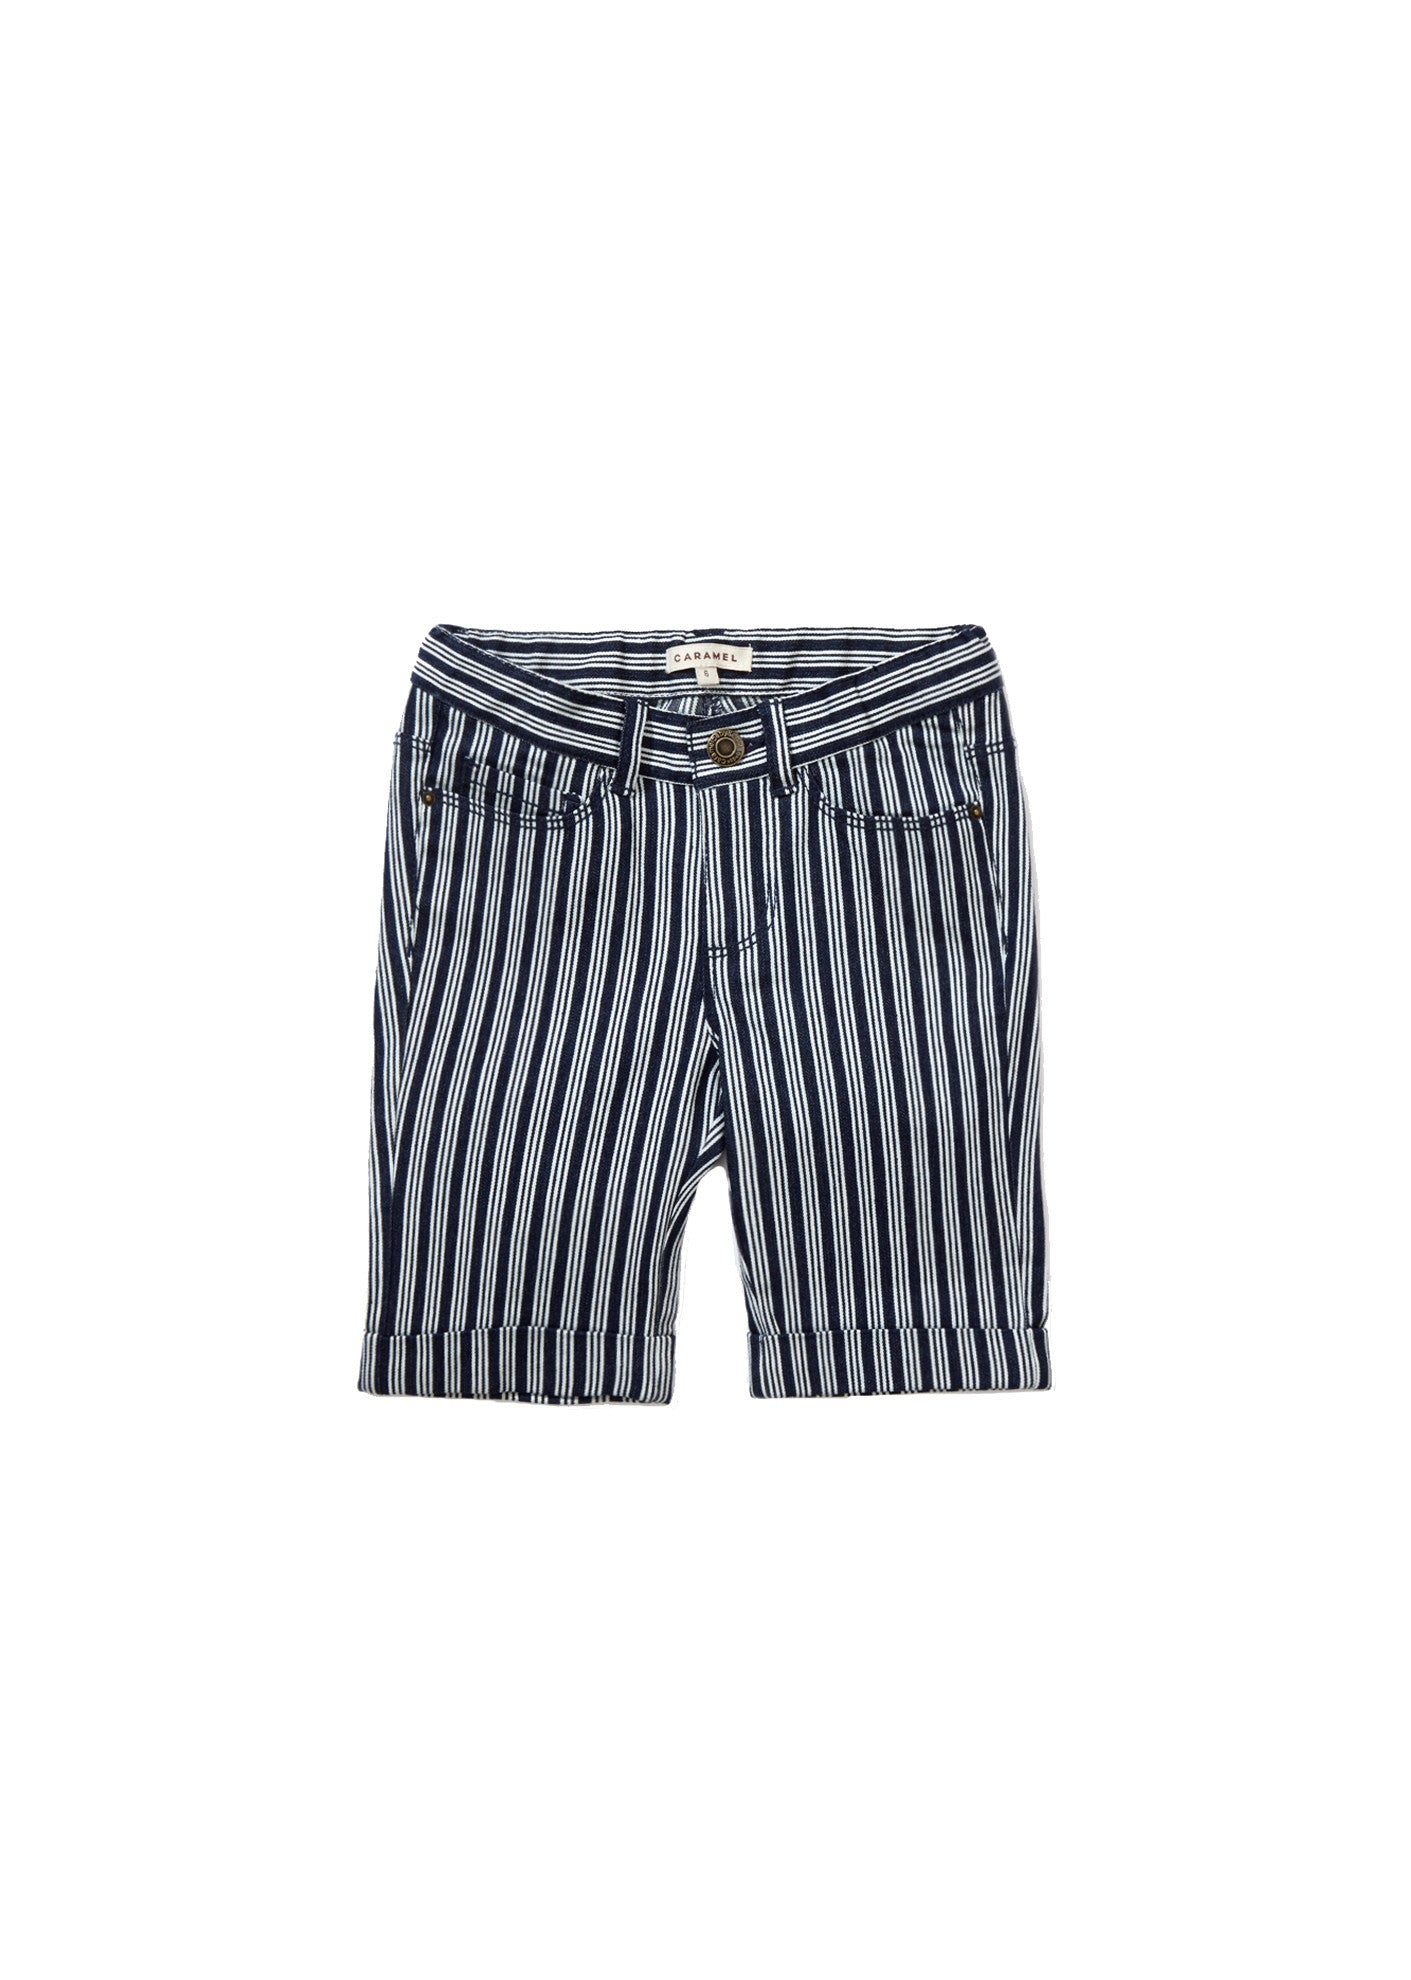 Boys Navy Blue Striped Shorts